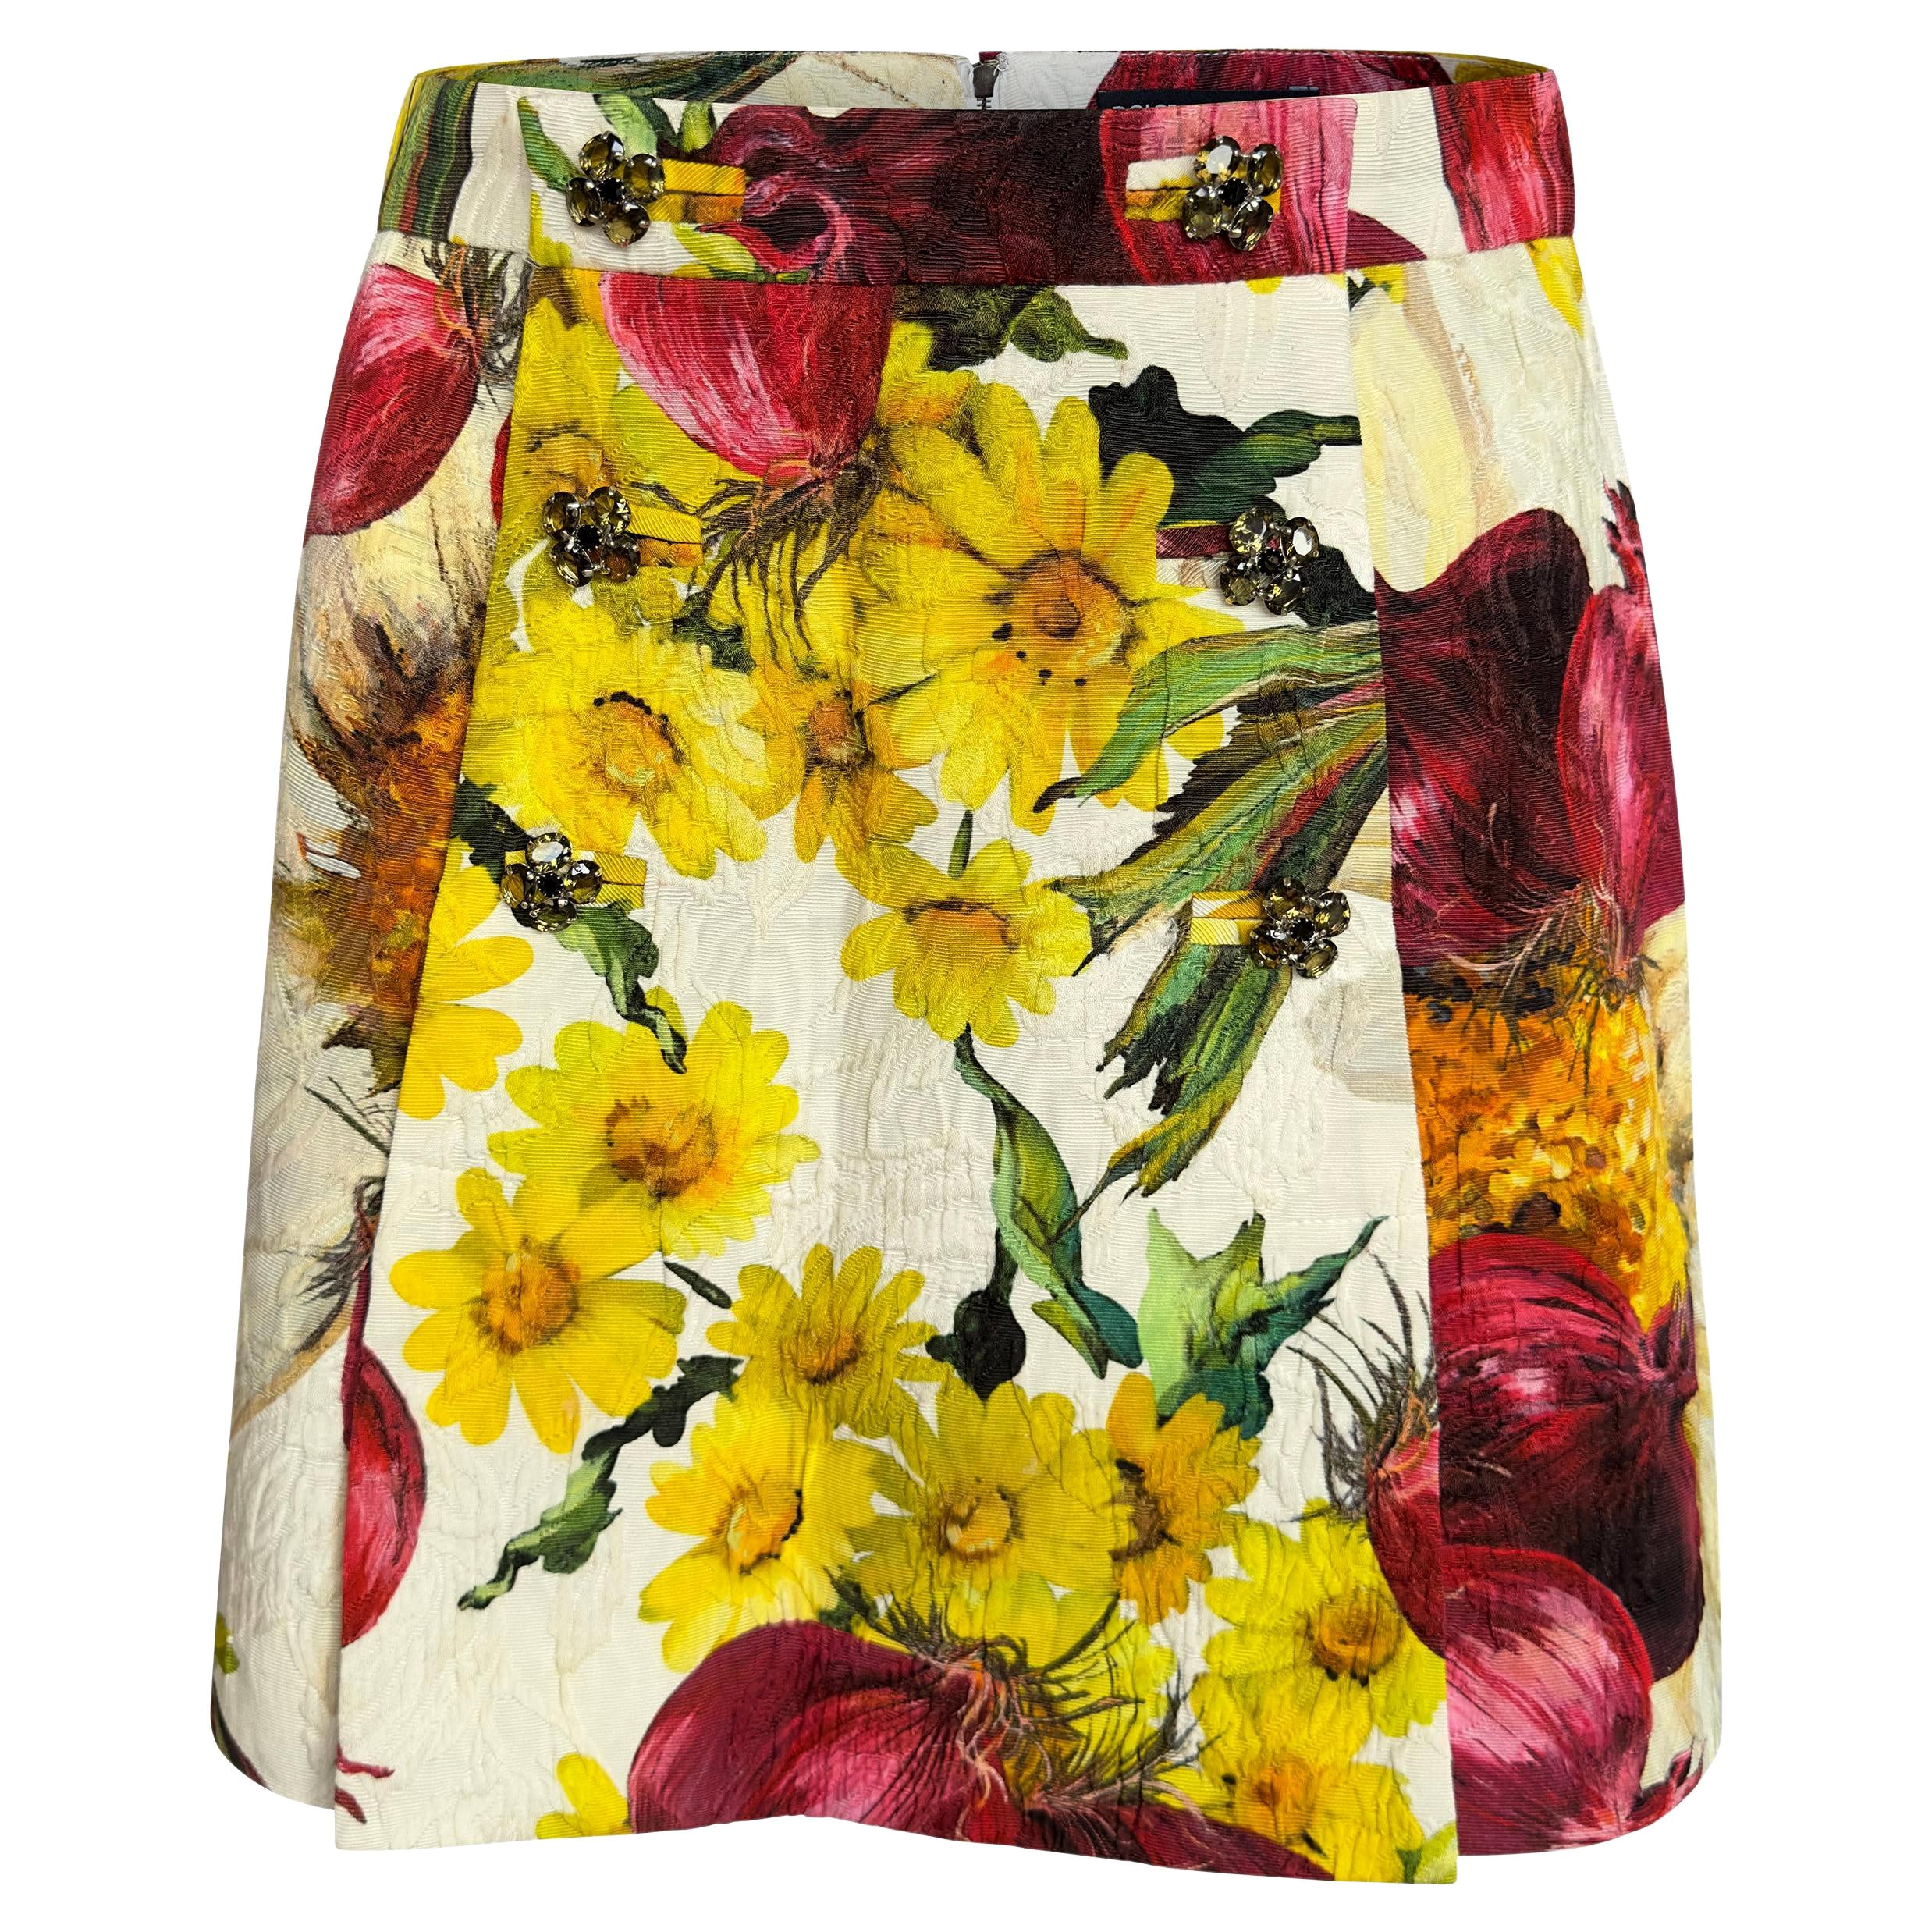 Dolce & Gabbana S/S 2012  embellished high waist mini skirt size S 